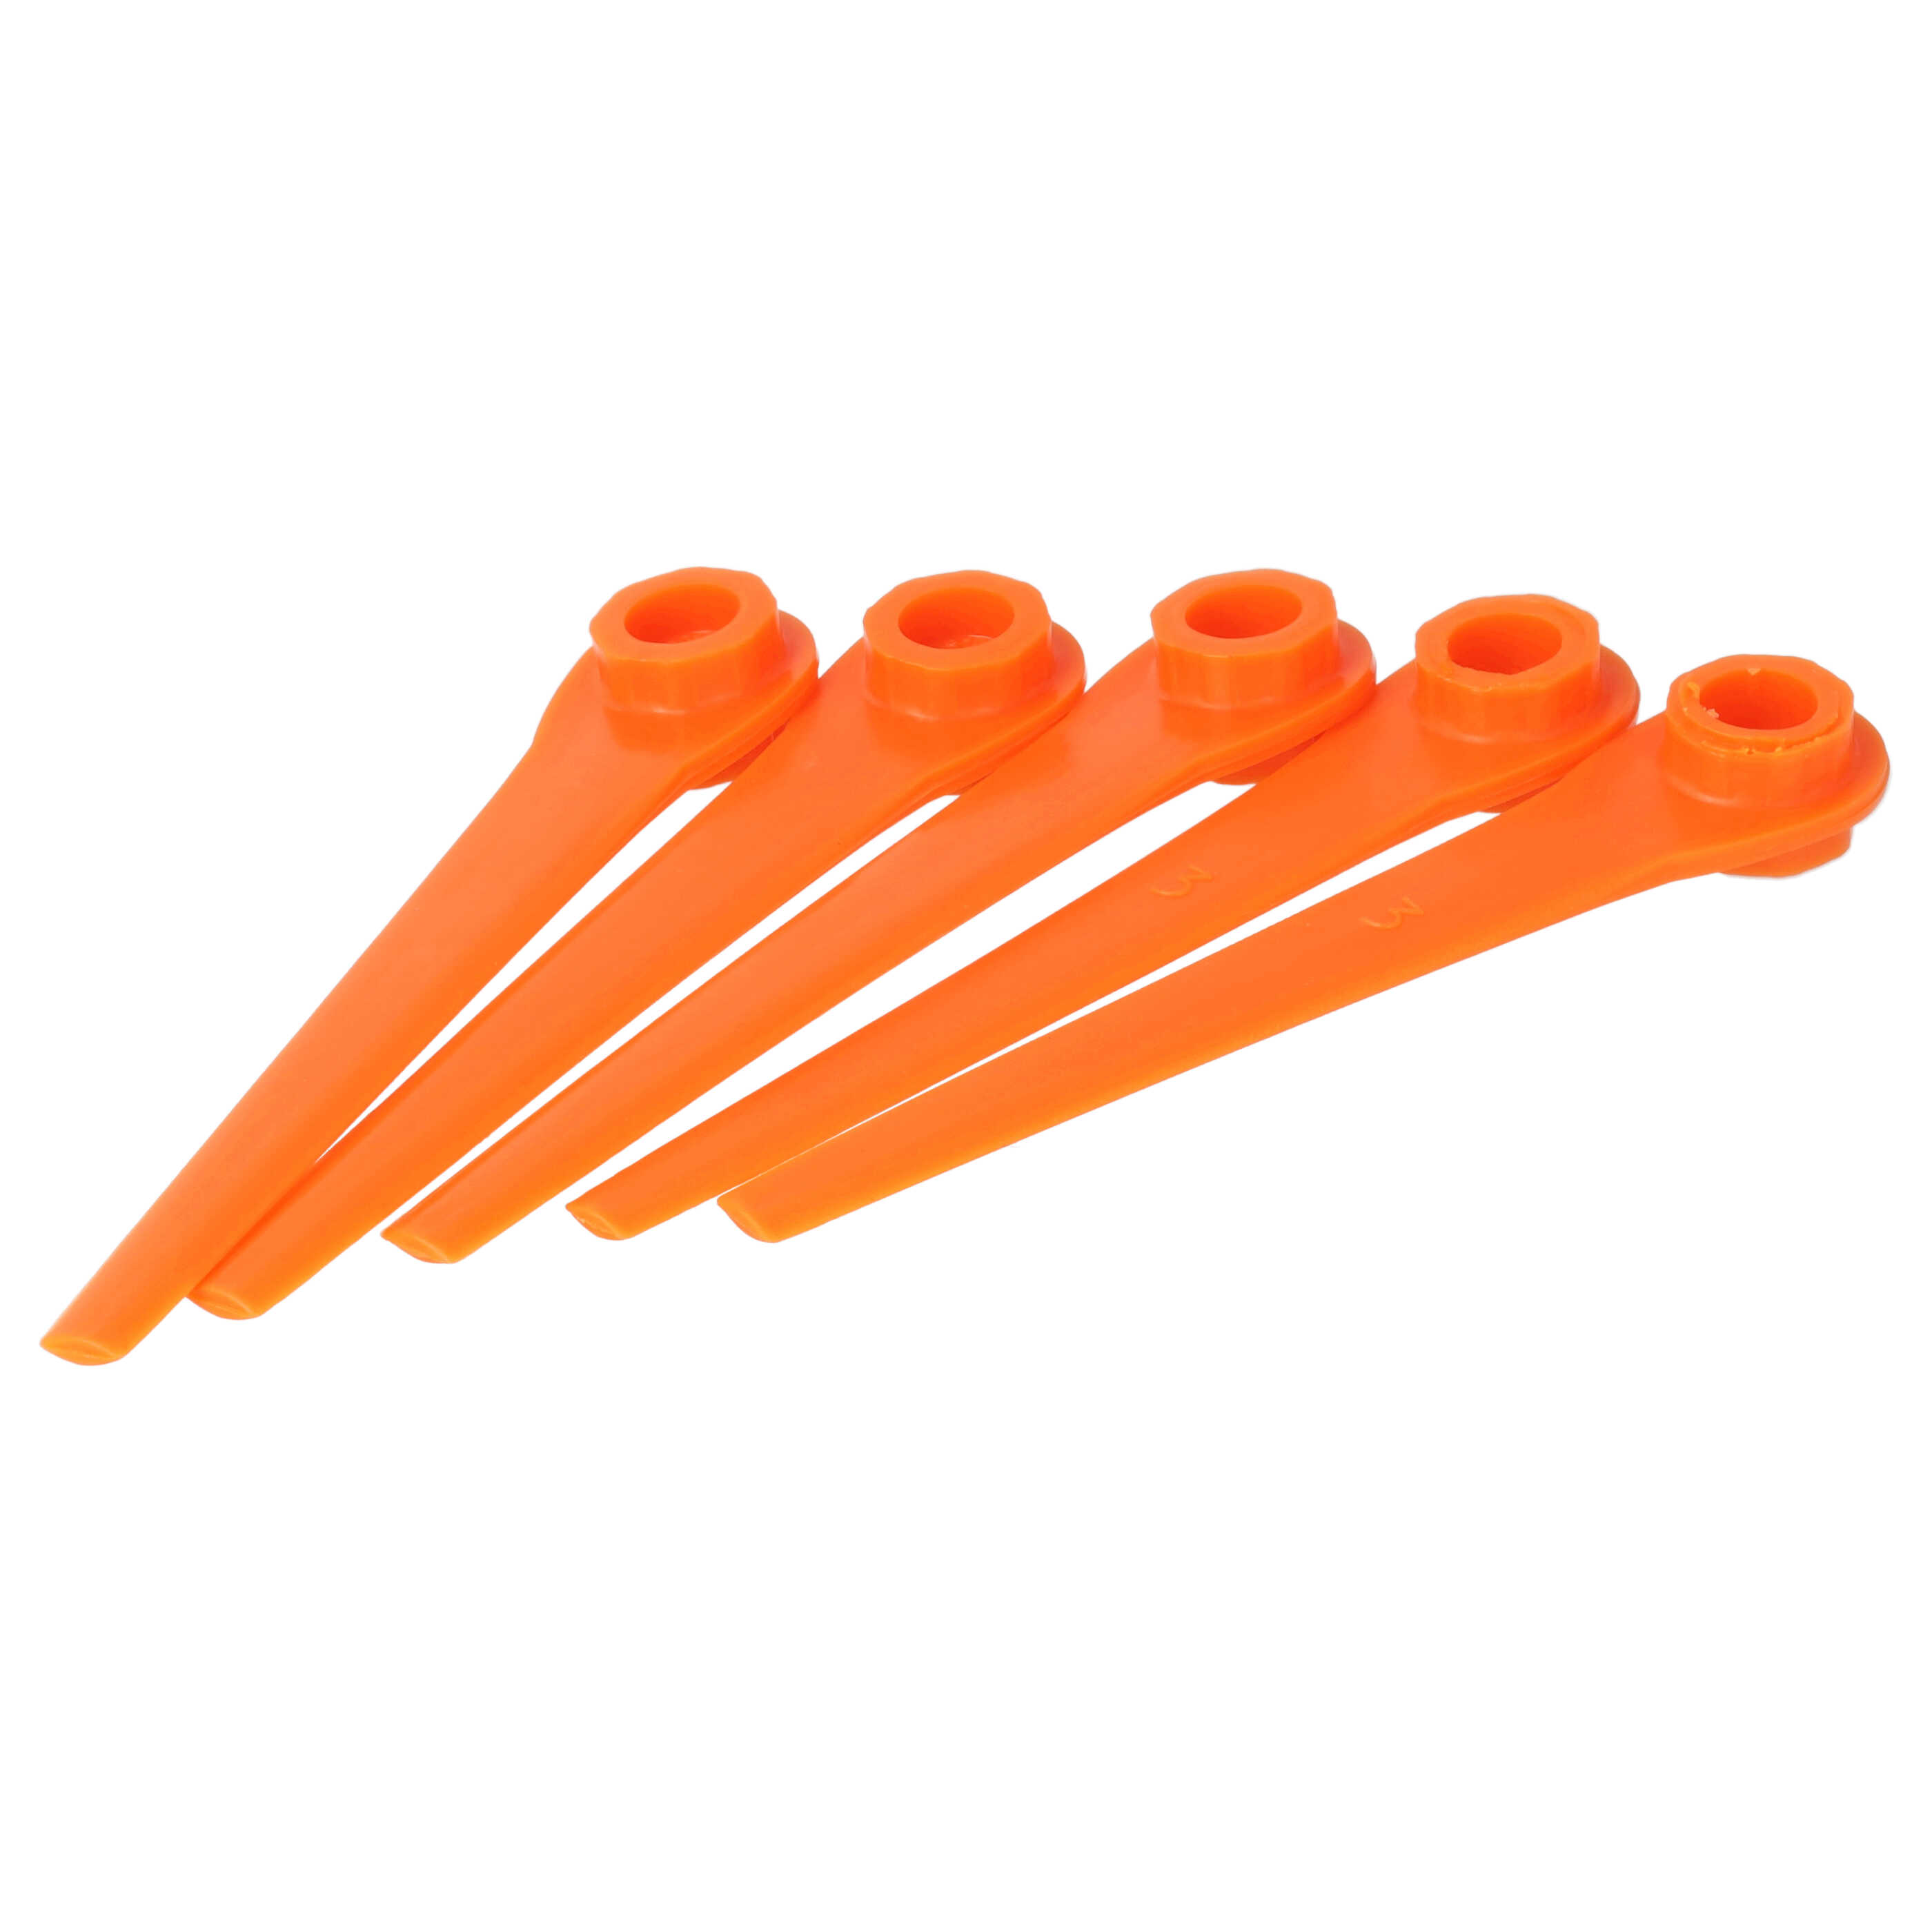 50x Cuchillas reemplaza Gardena RotorCut 5368-20 para cortacéspedes - naranja